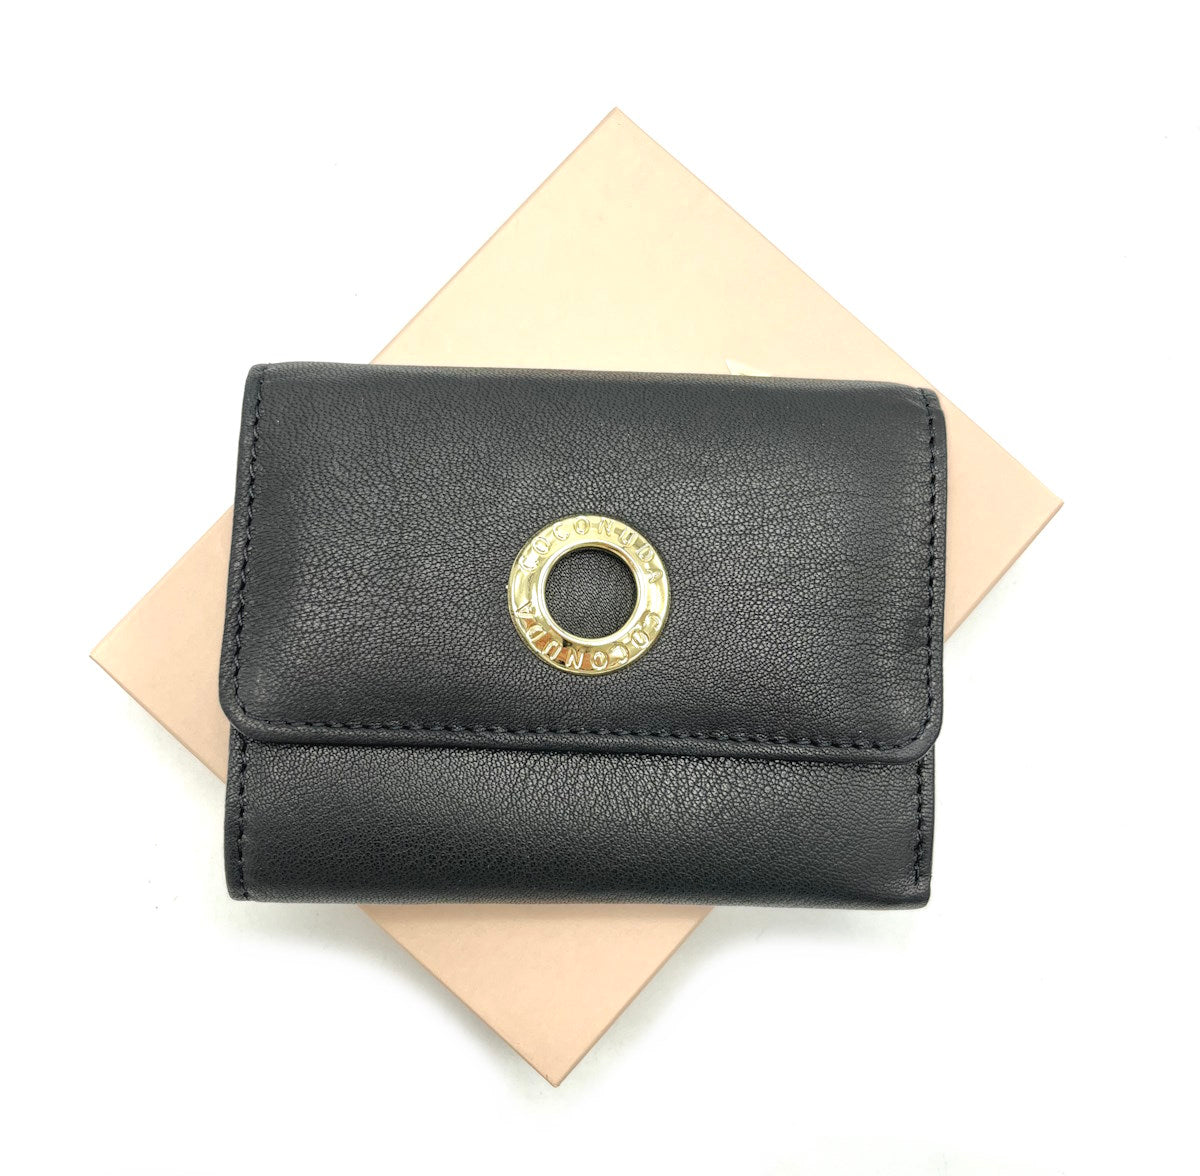 Genuine leather wallet, Coconuda, art. PDK403-79